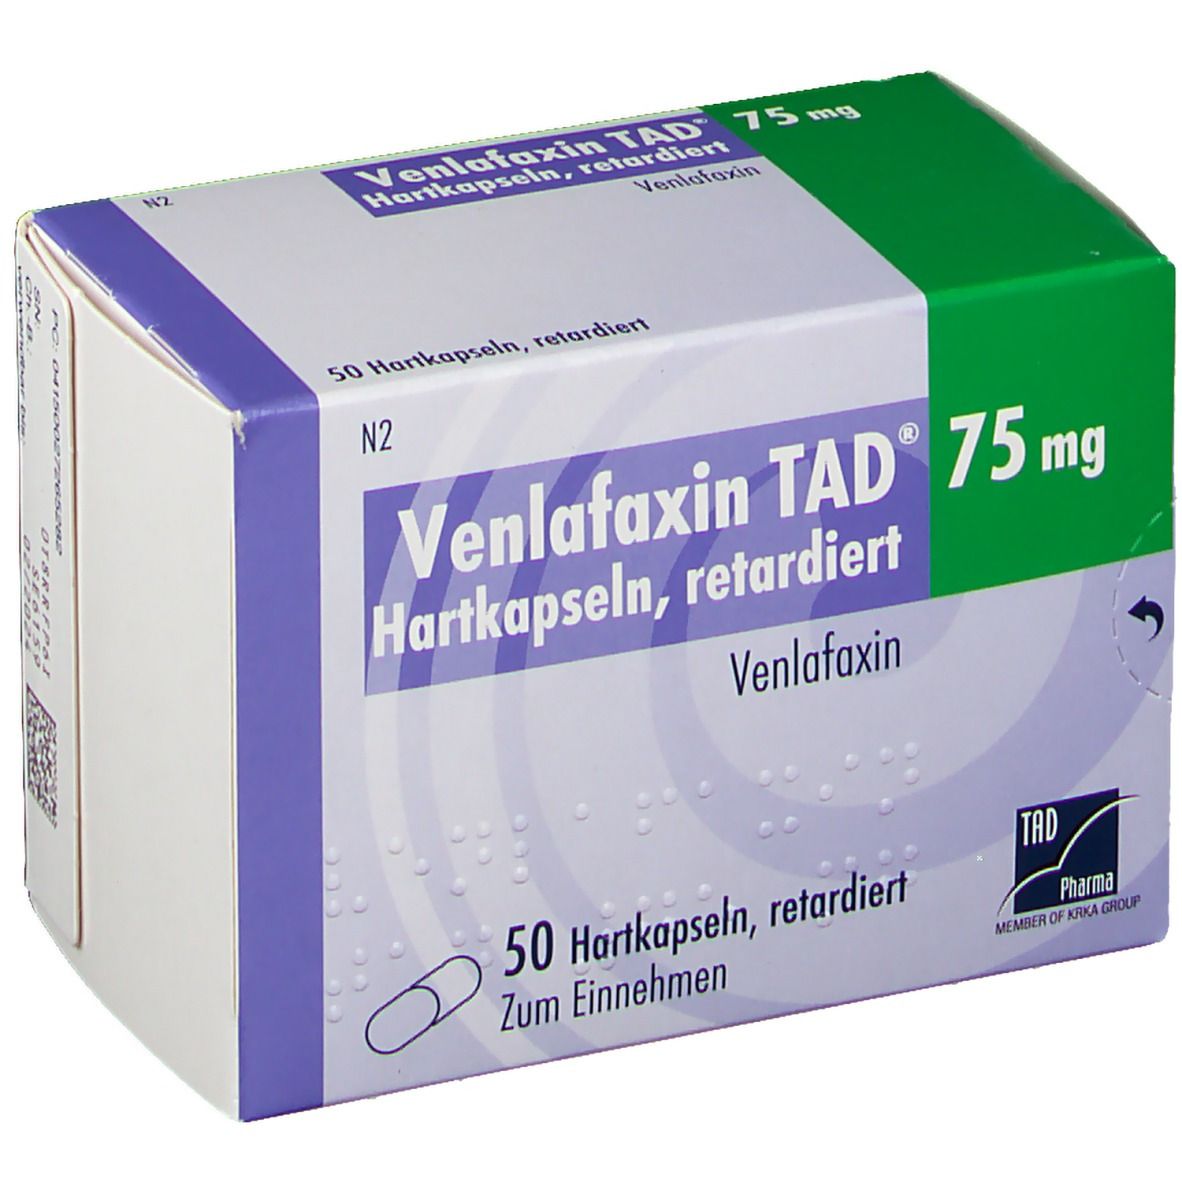 Купить венлафаксин 75. Венлафаксин 75. Венлафаксин 50 мг. Венлафаксин 75 мг. Венлафаксин импортный 75 мг.